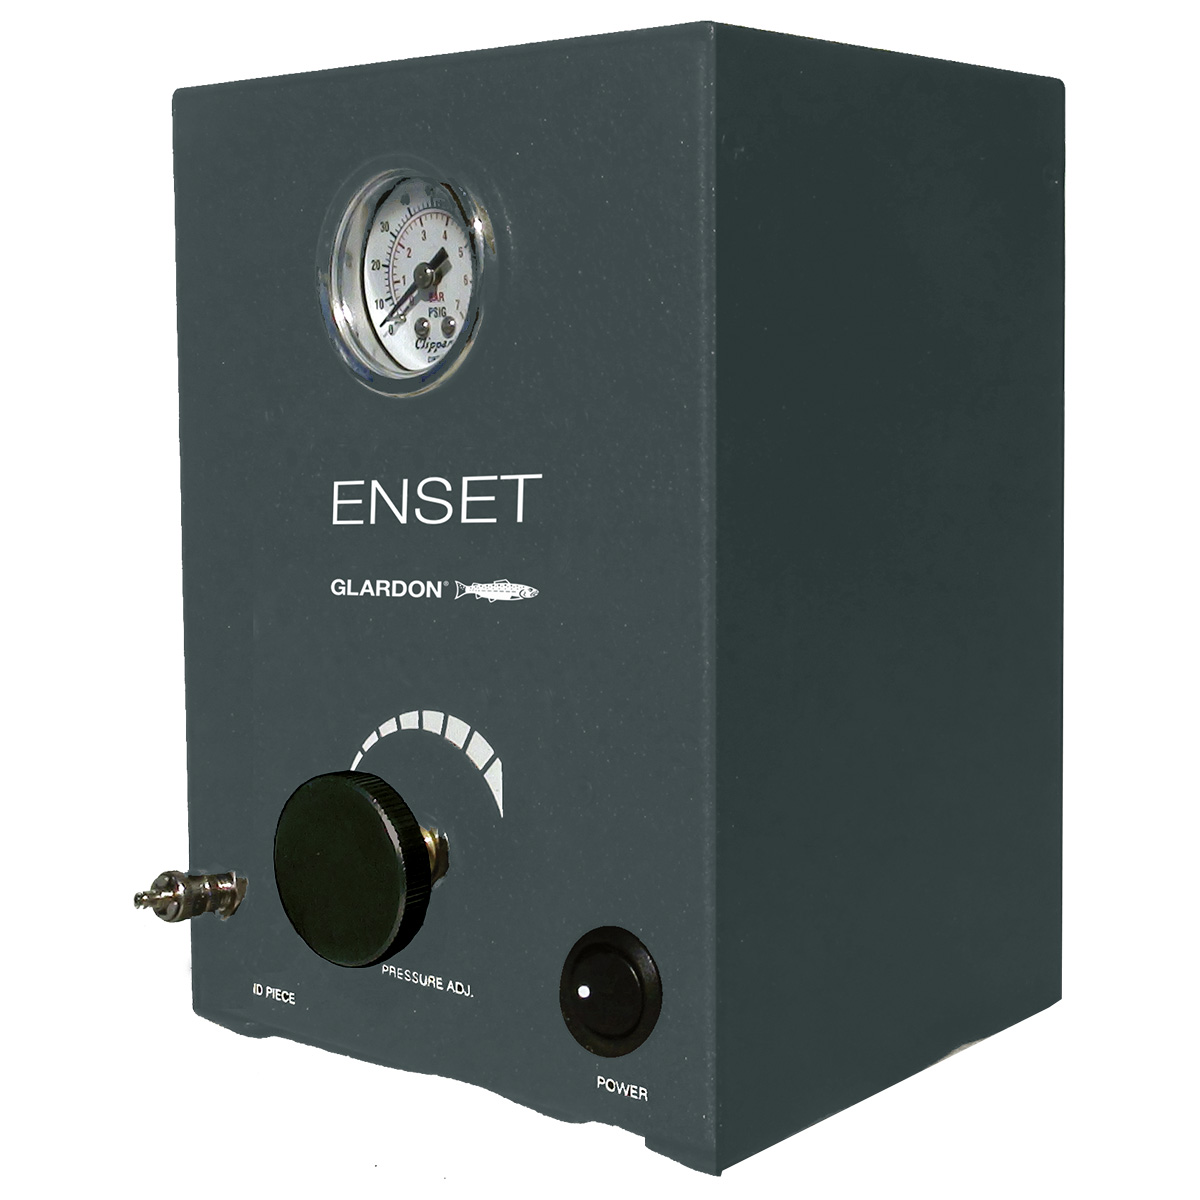 Tafelbedieningseenheid EnSet Compact, met enkele aansluiting, analoge weergave, frequentie tot 1500 slagen/min.